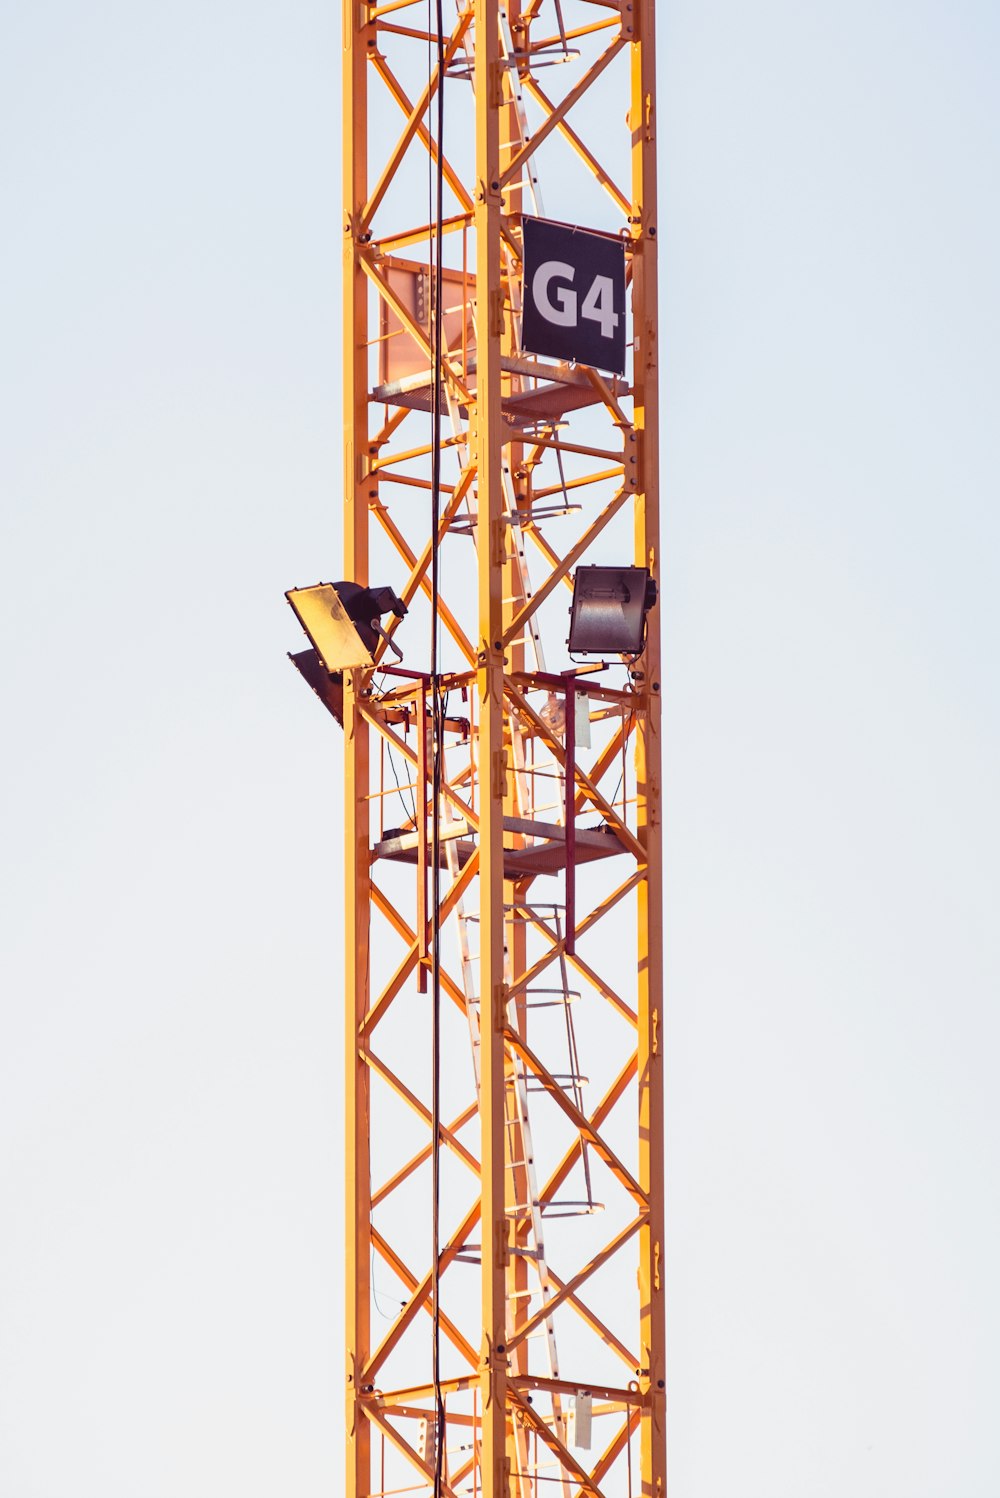 spot light on yellow steel tower